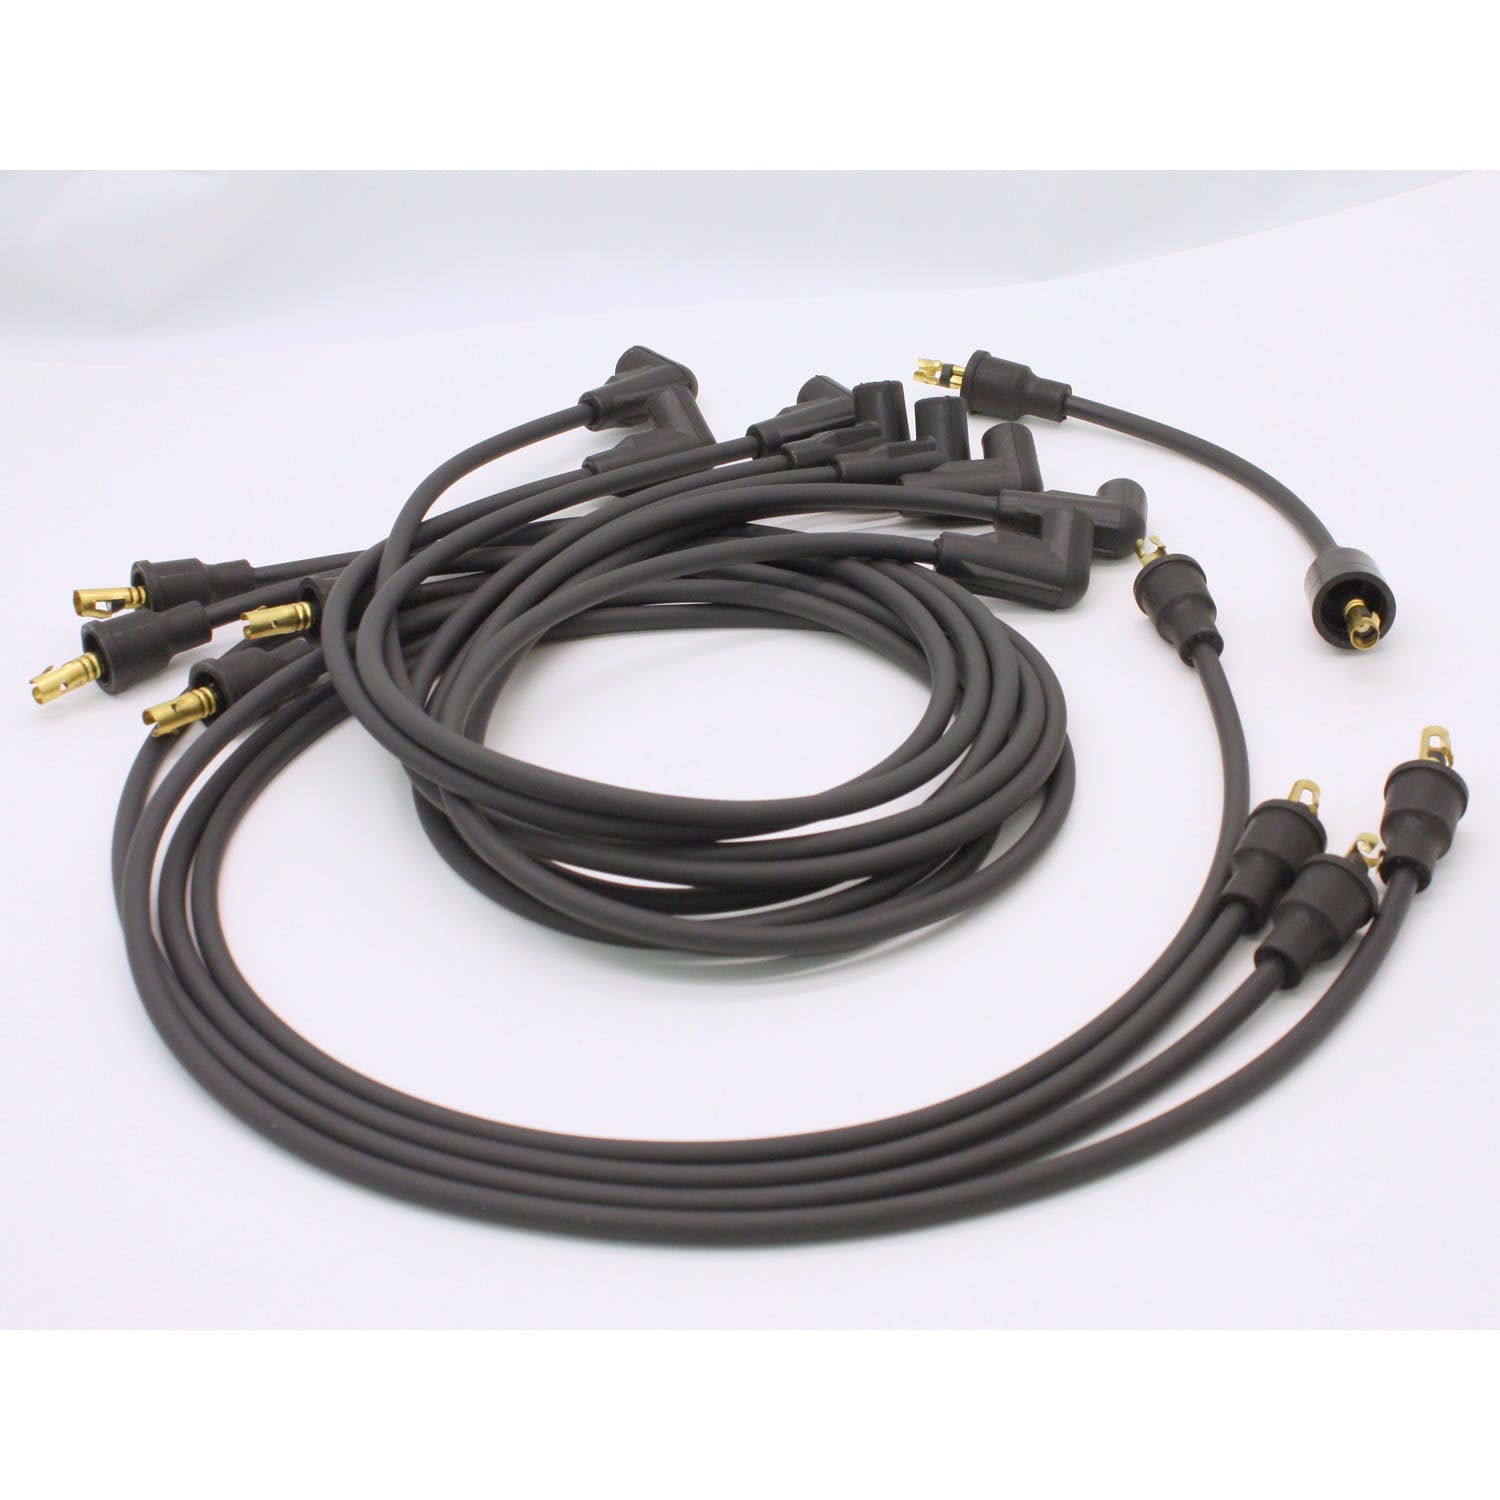 PerTronix 708101 Spark Plug Wire Set